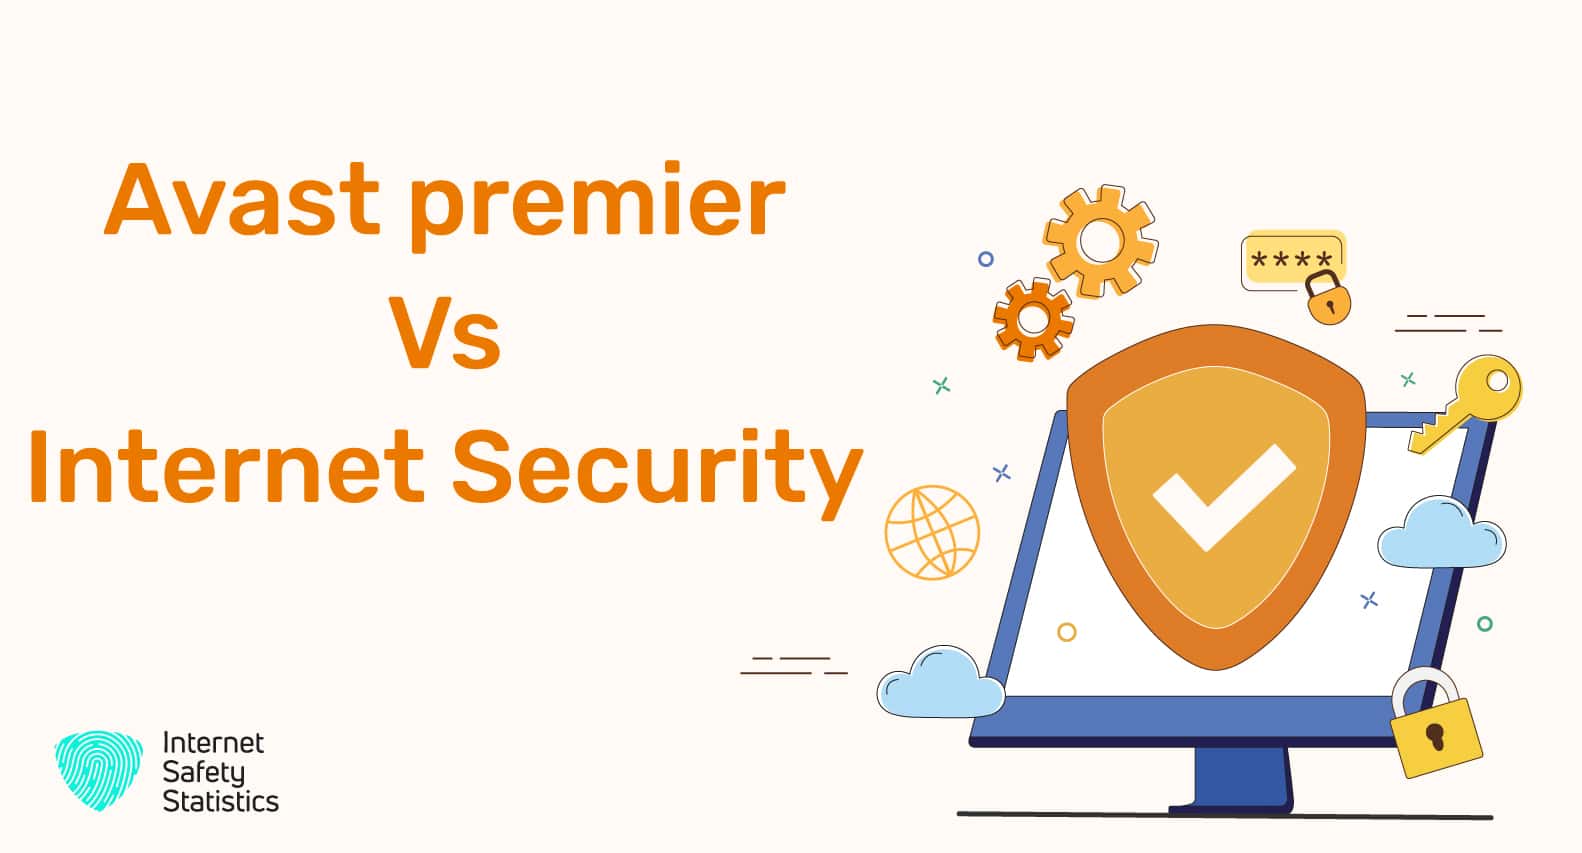 Avast Premier vs Internet Security